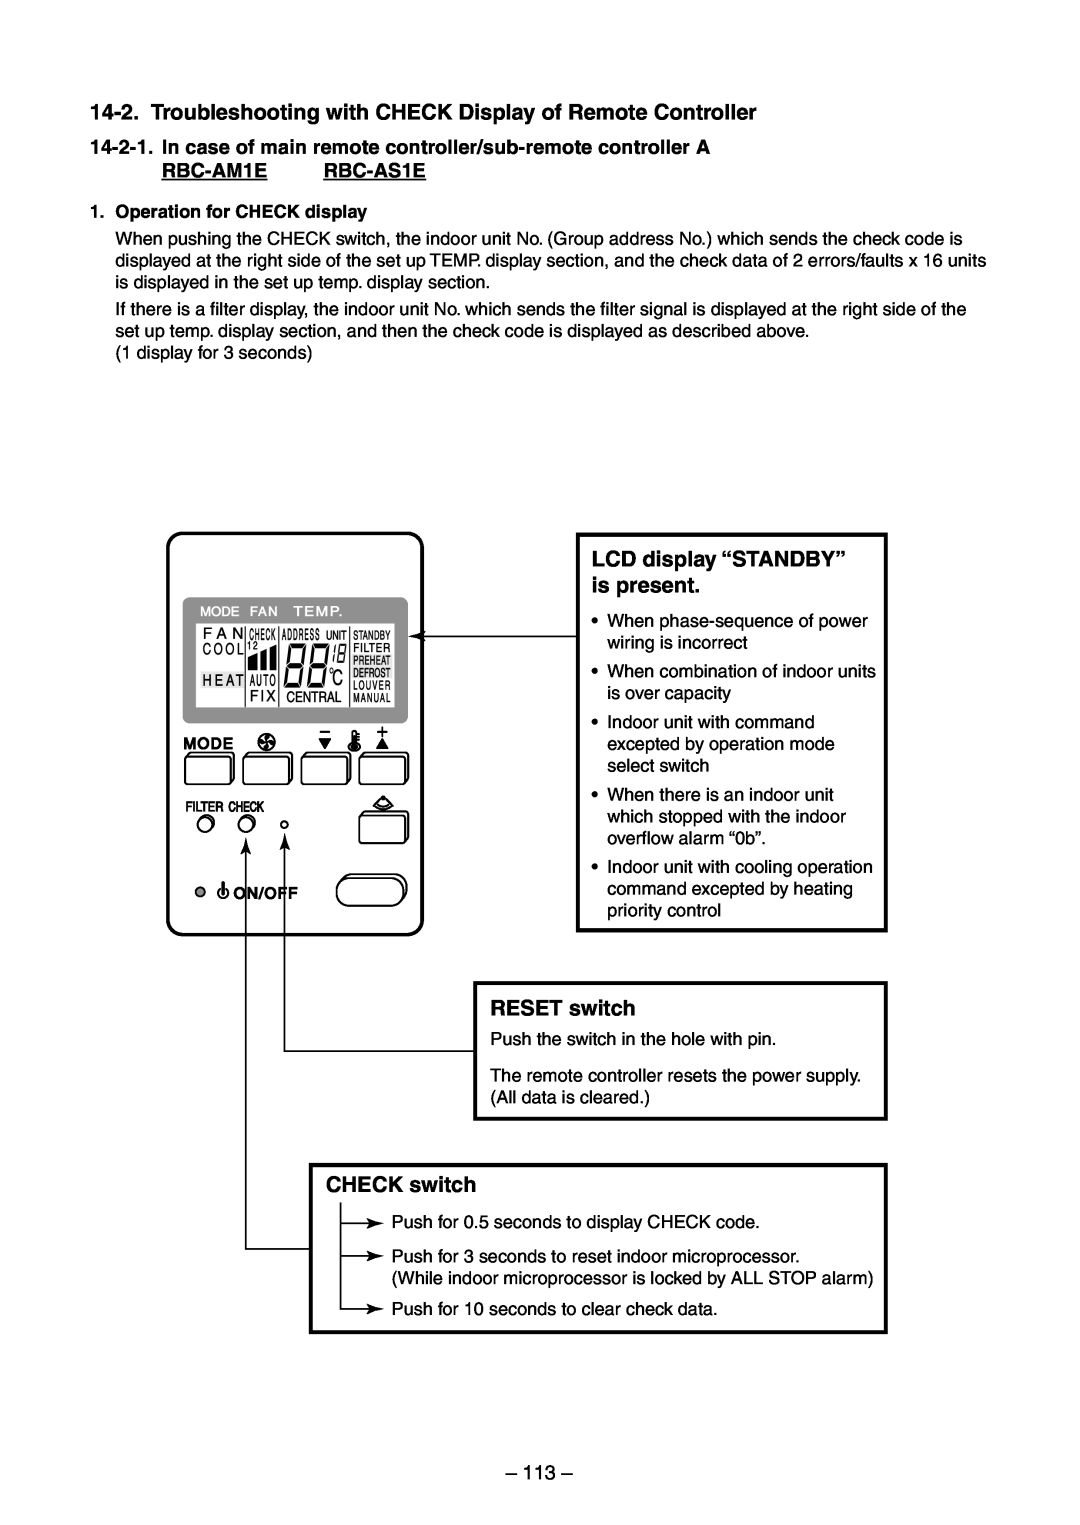 Toshiba RAV-SM800BT-E, RAV-SM800AT-E LCD display “STANDBY” is present, RESET switch, CHECK switch, RBC-AM1E RBC-AS1E, 113 